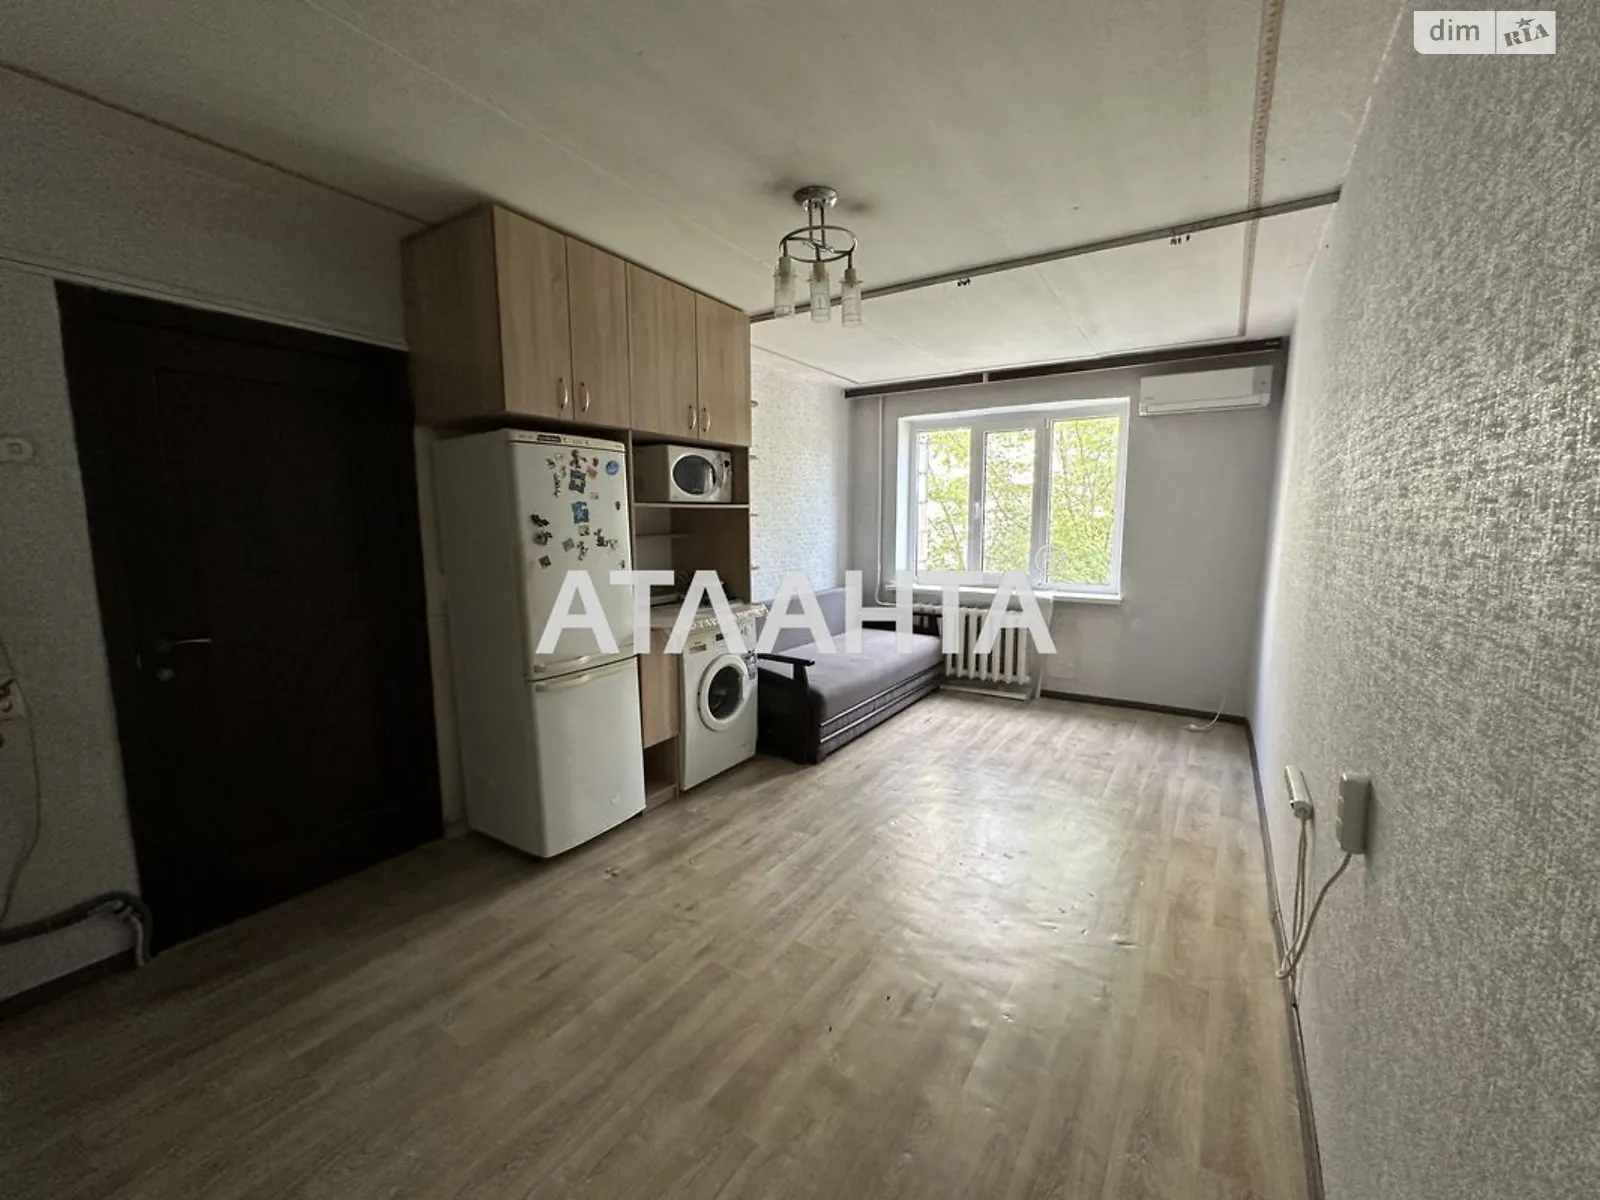 Продается комната 18 кв. м в Киеве, цена: 19000 $ - фото 1